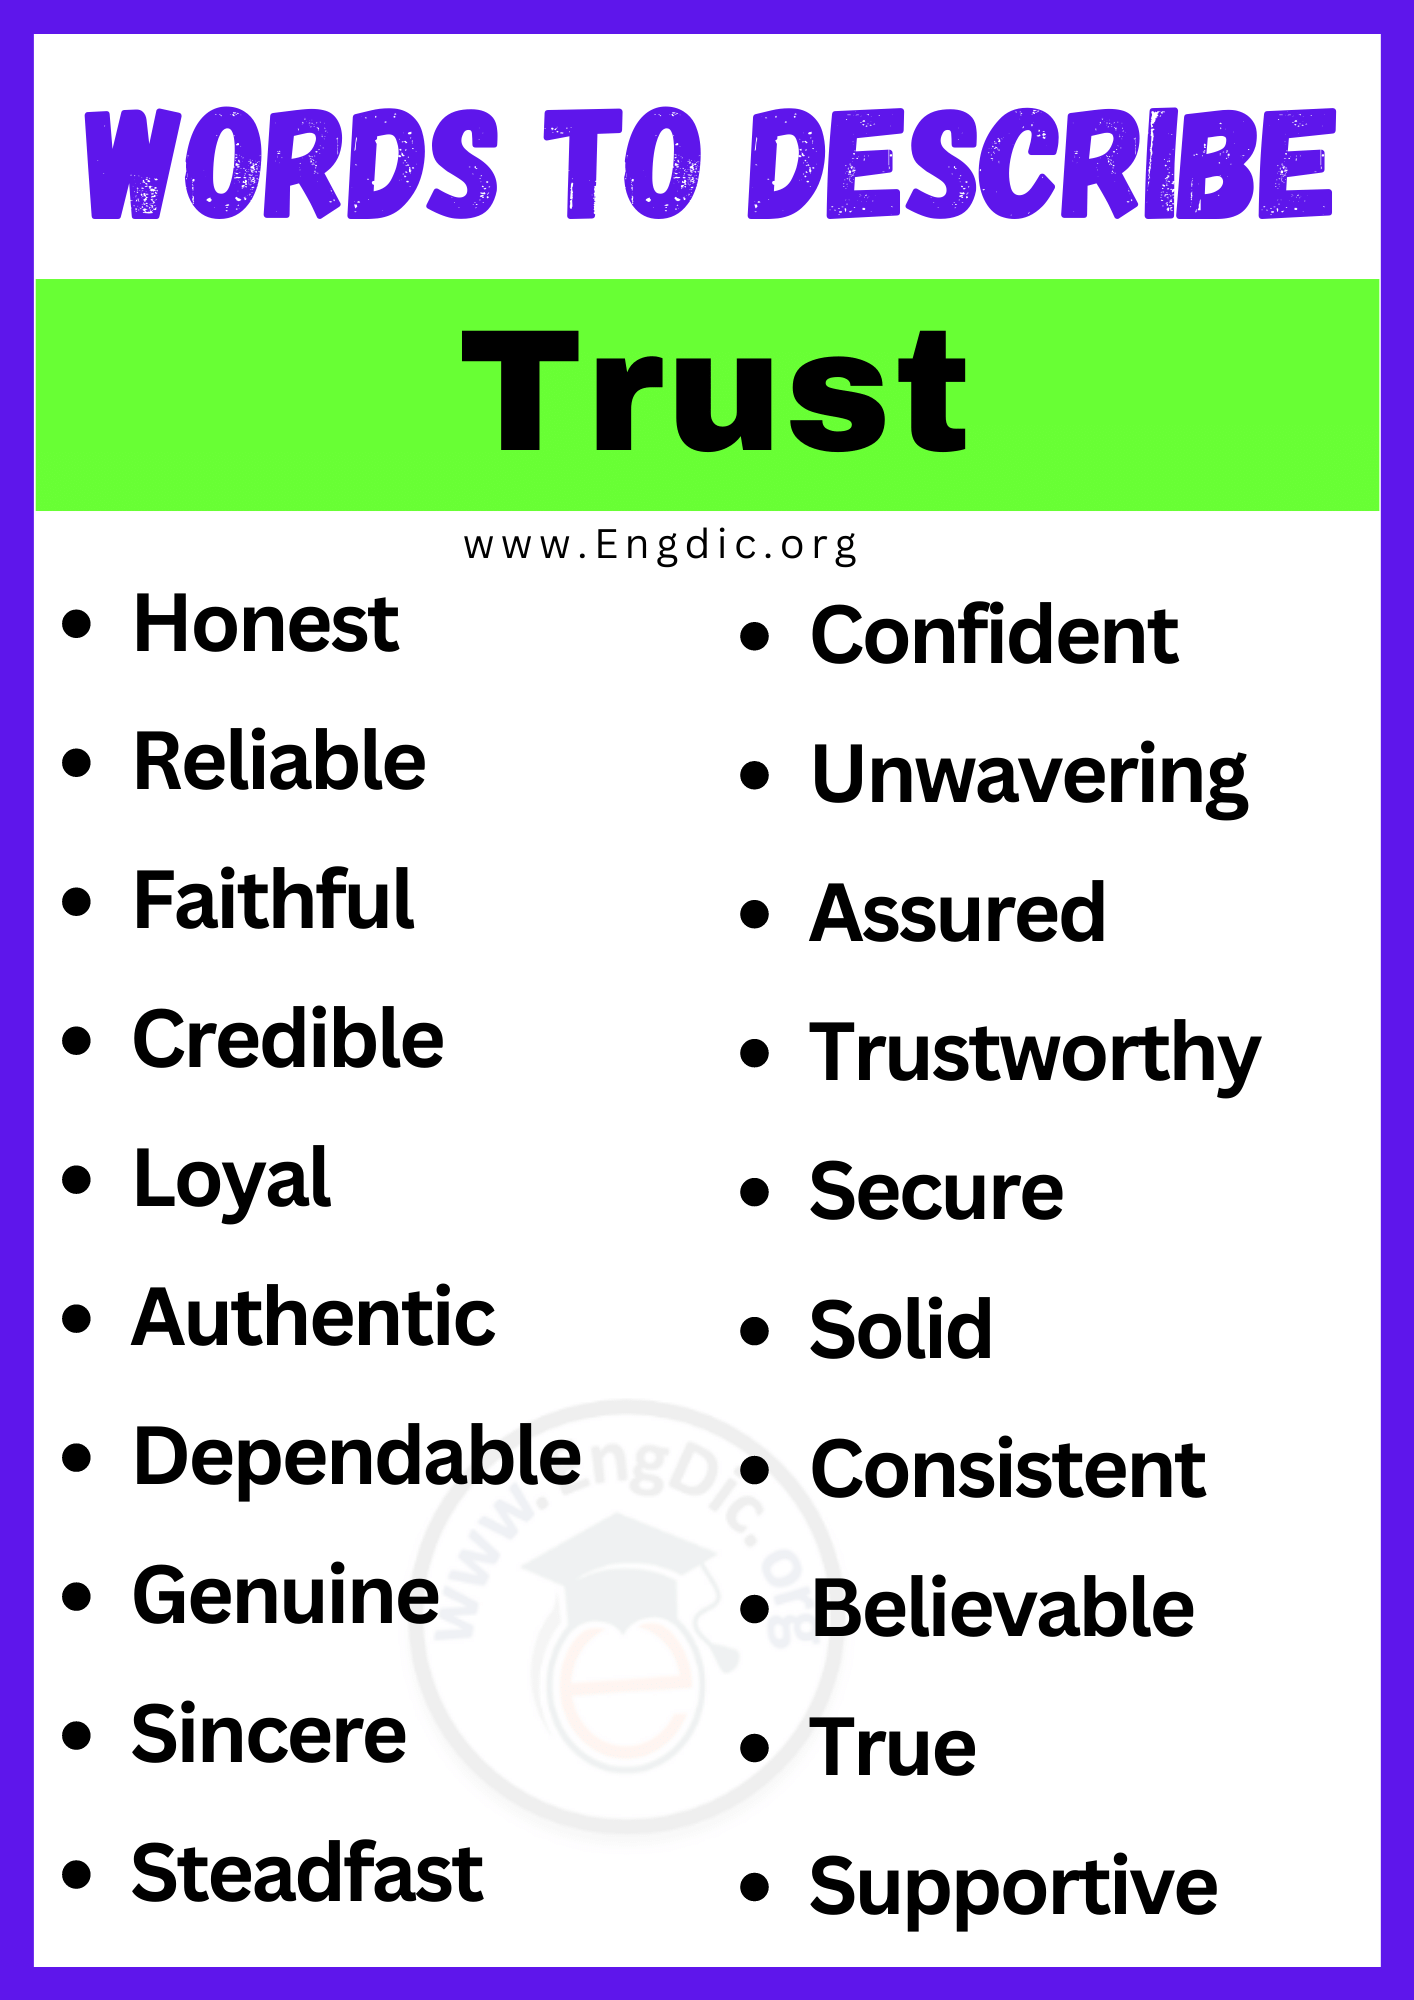 Words to Describe Trust